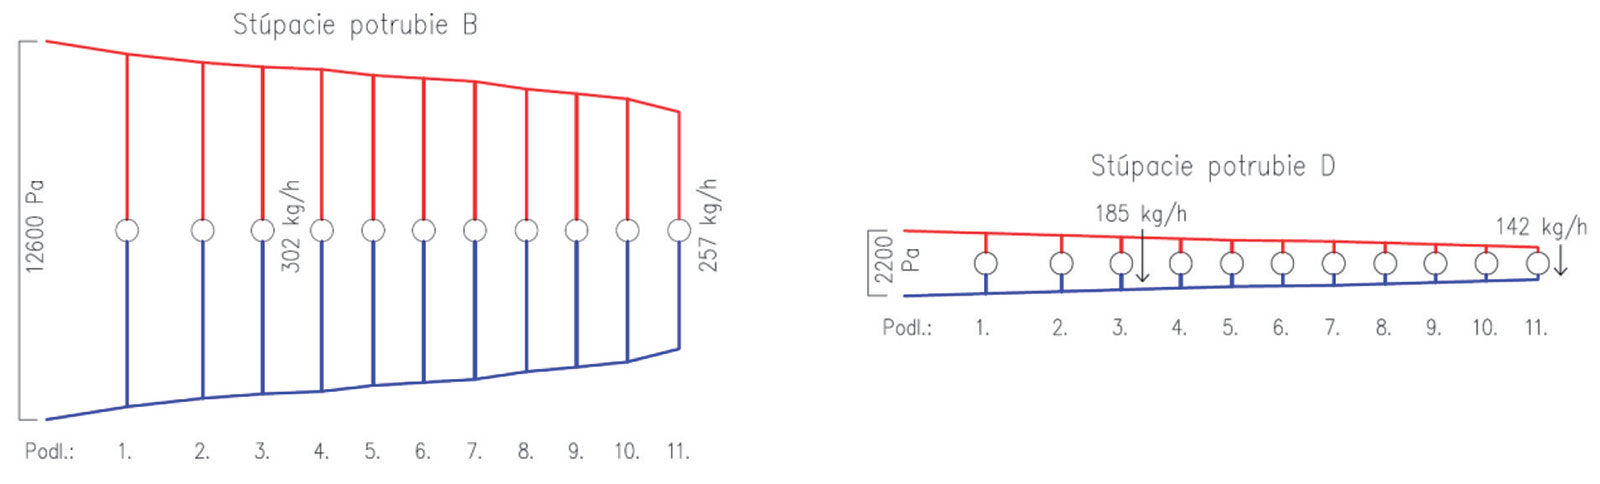 Obr. 3 Tlakové diagramy stúpacích potrubí vetiev B a D pri drsnosti k = 4 mm
